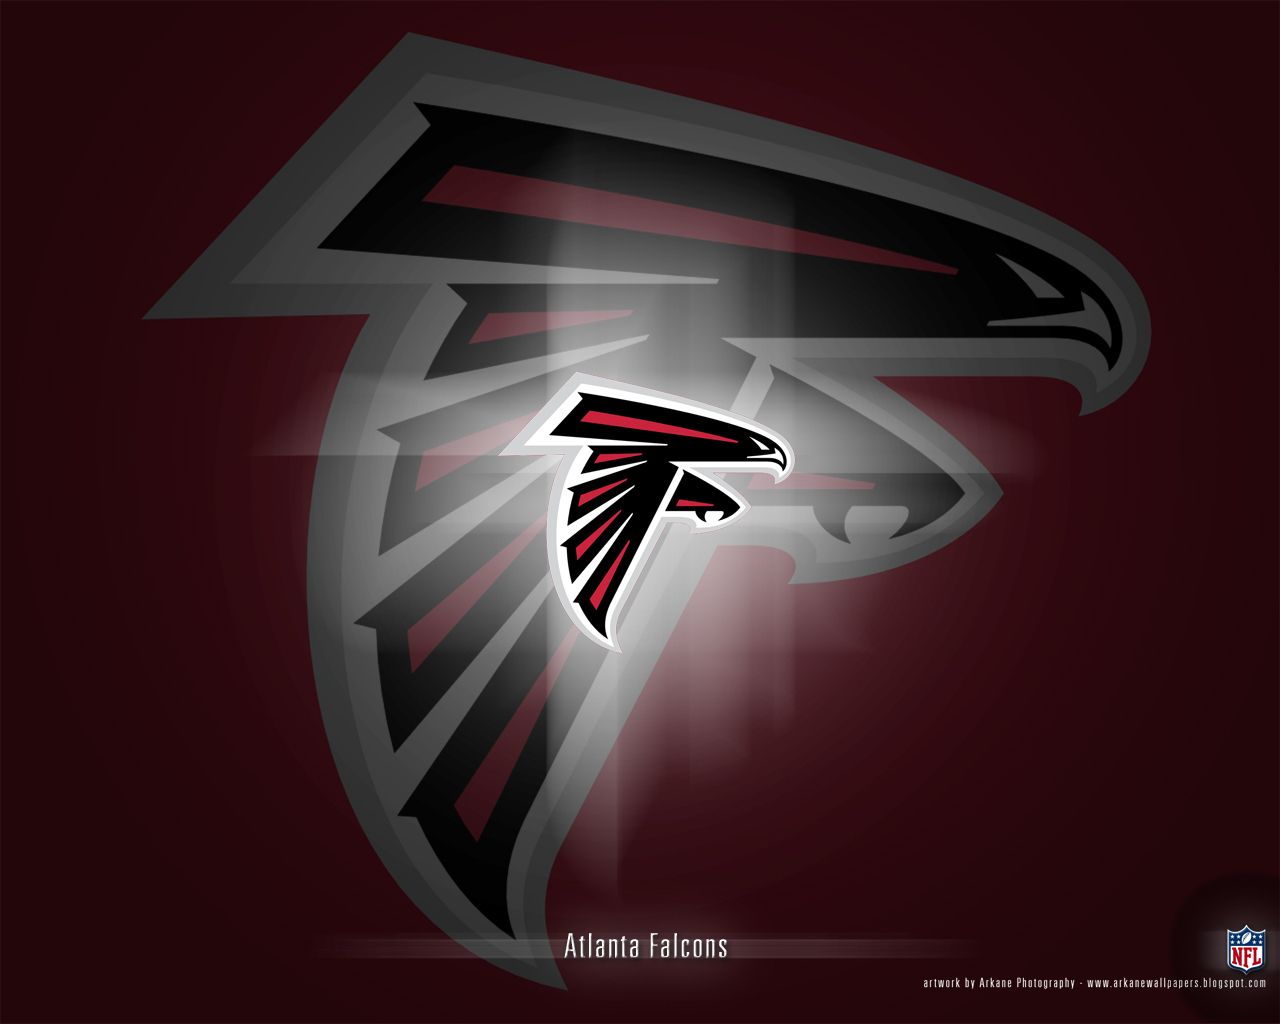 image of atl falcons. Atlanta Falcons Falcons Wallpaper. Atlanta falcons wallpaper, Atlanta falcons logo, Atlanta falcons art